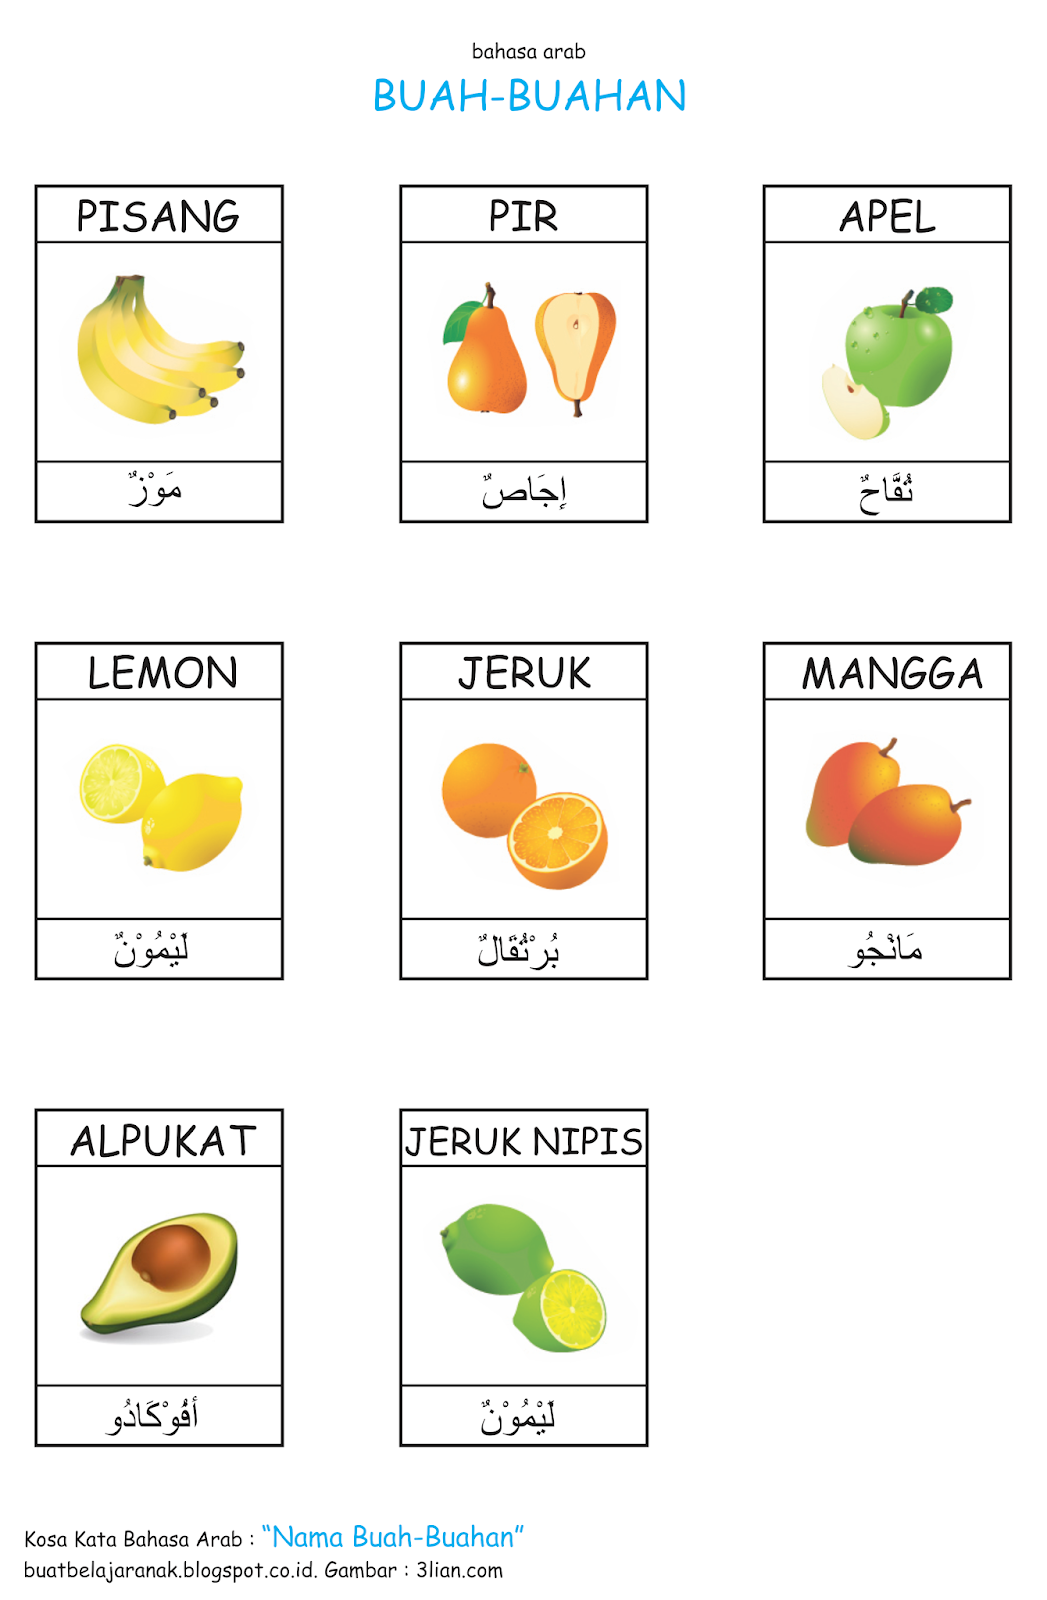 Kosa Kata Nama  Buah  buahan Dalam  Bahasa  Arab  Buat 